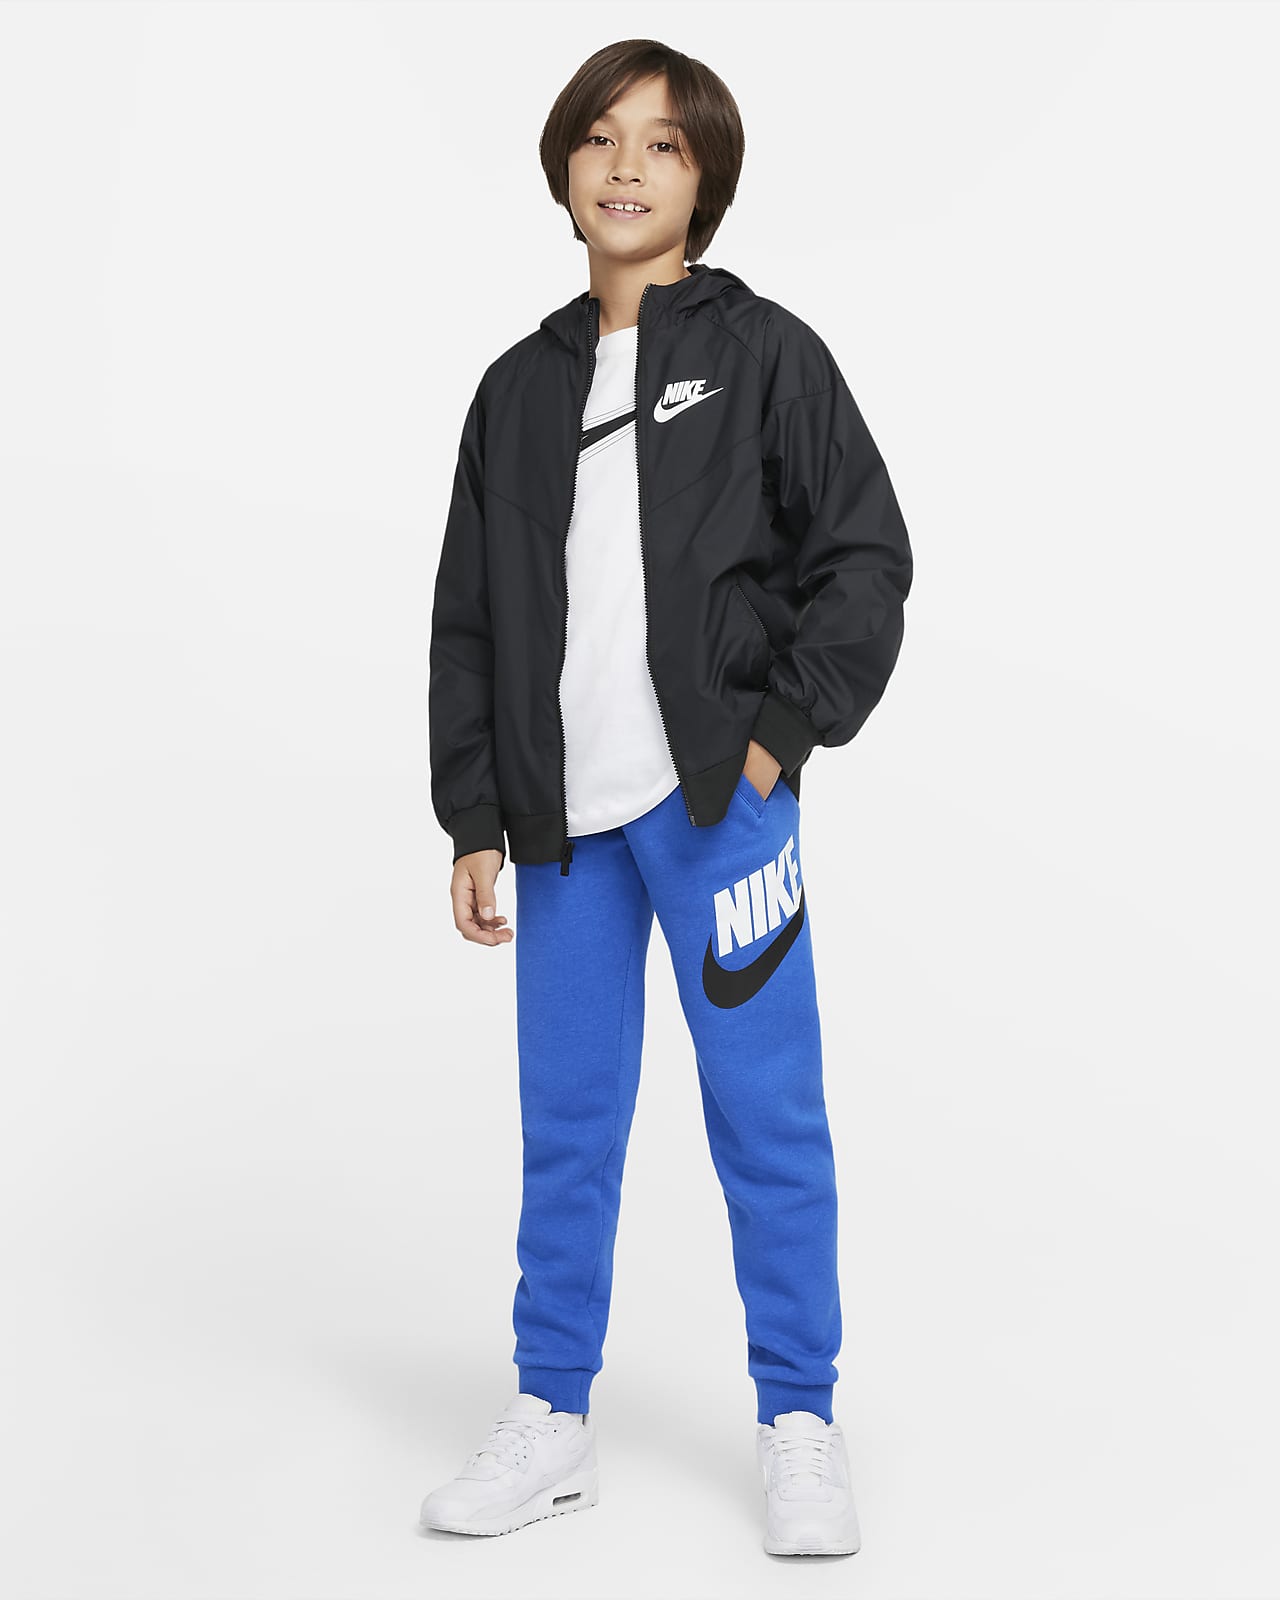 Buy Boys Nike Jacket & Pants Track Suit Set Sweatsuit (6, Grey Orange) at  Amazon.in